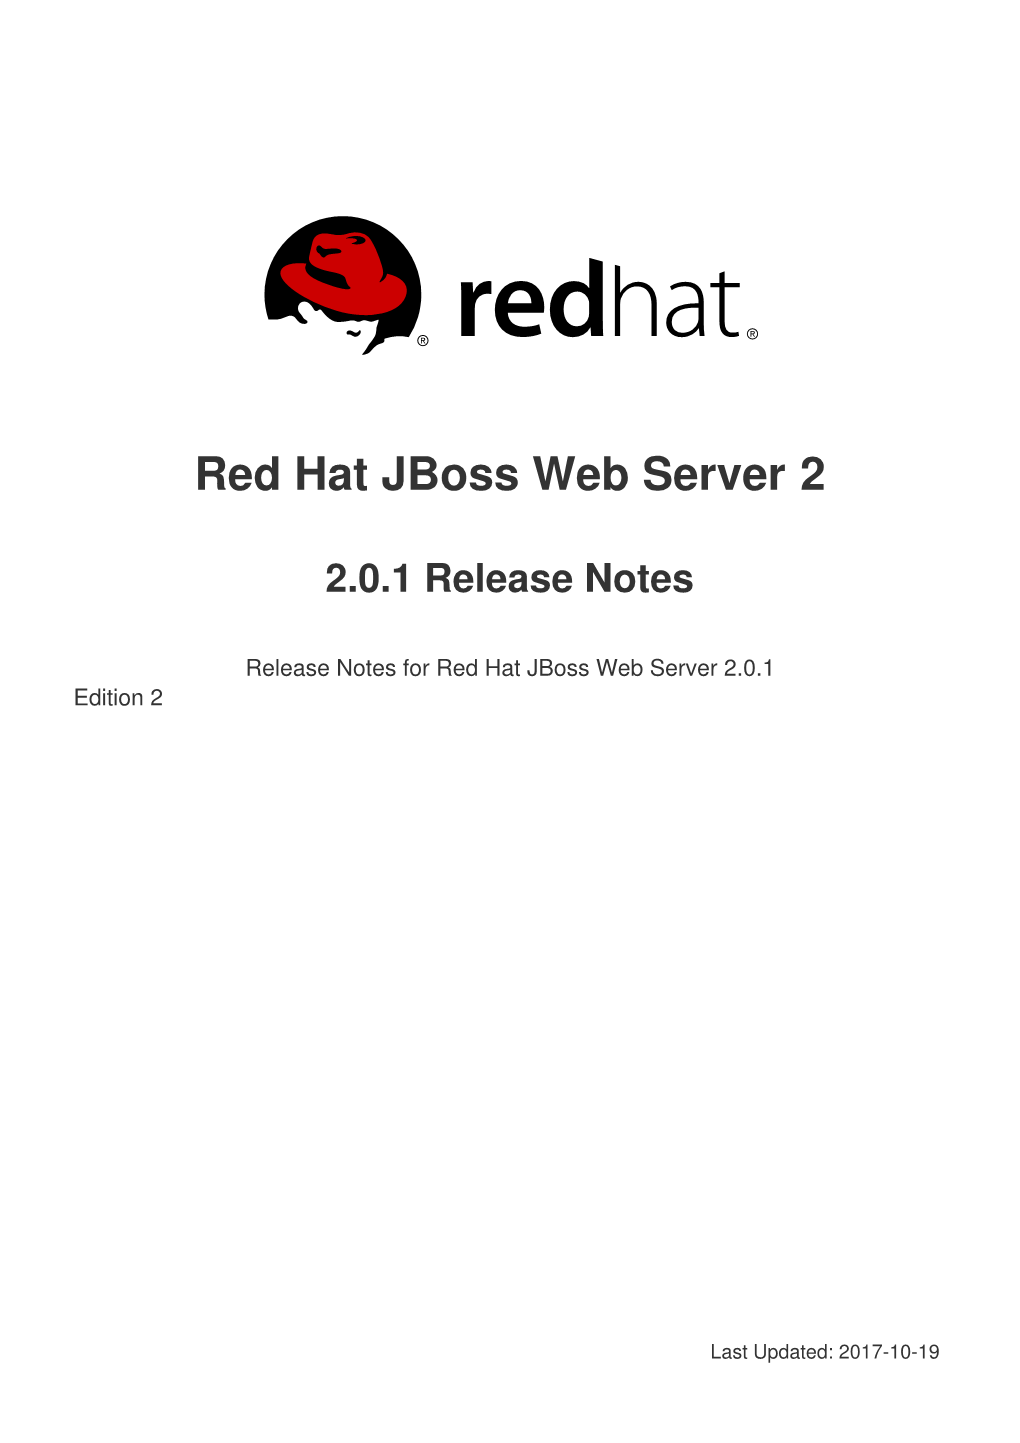 Red Hat Jboss Web Server 2 2.0.1 Release Notes